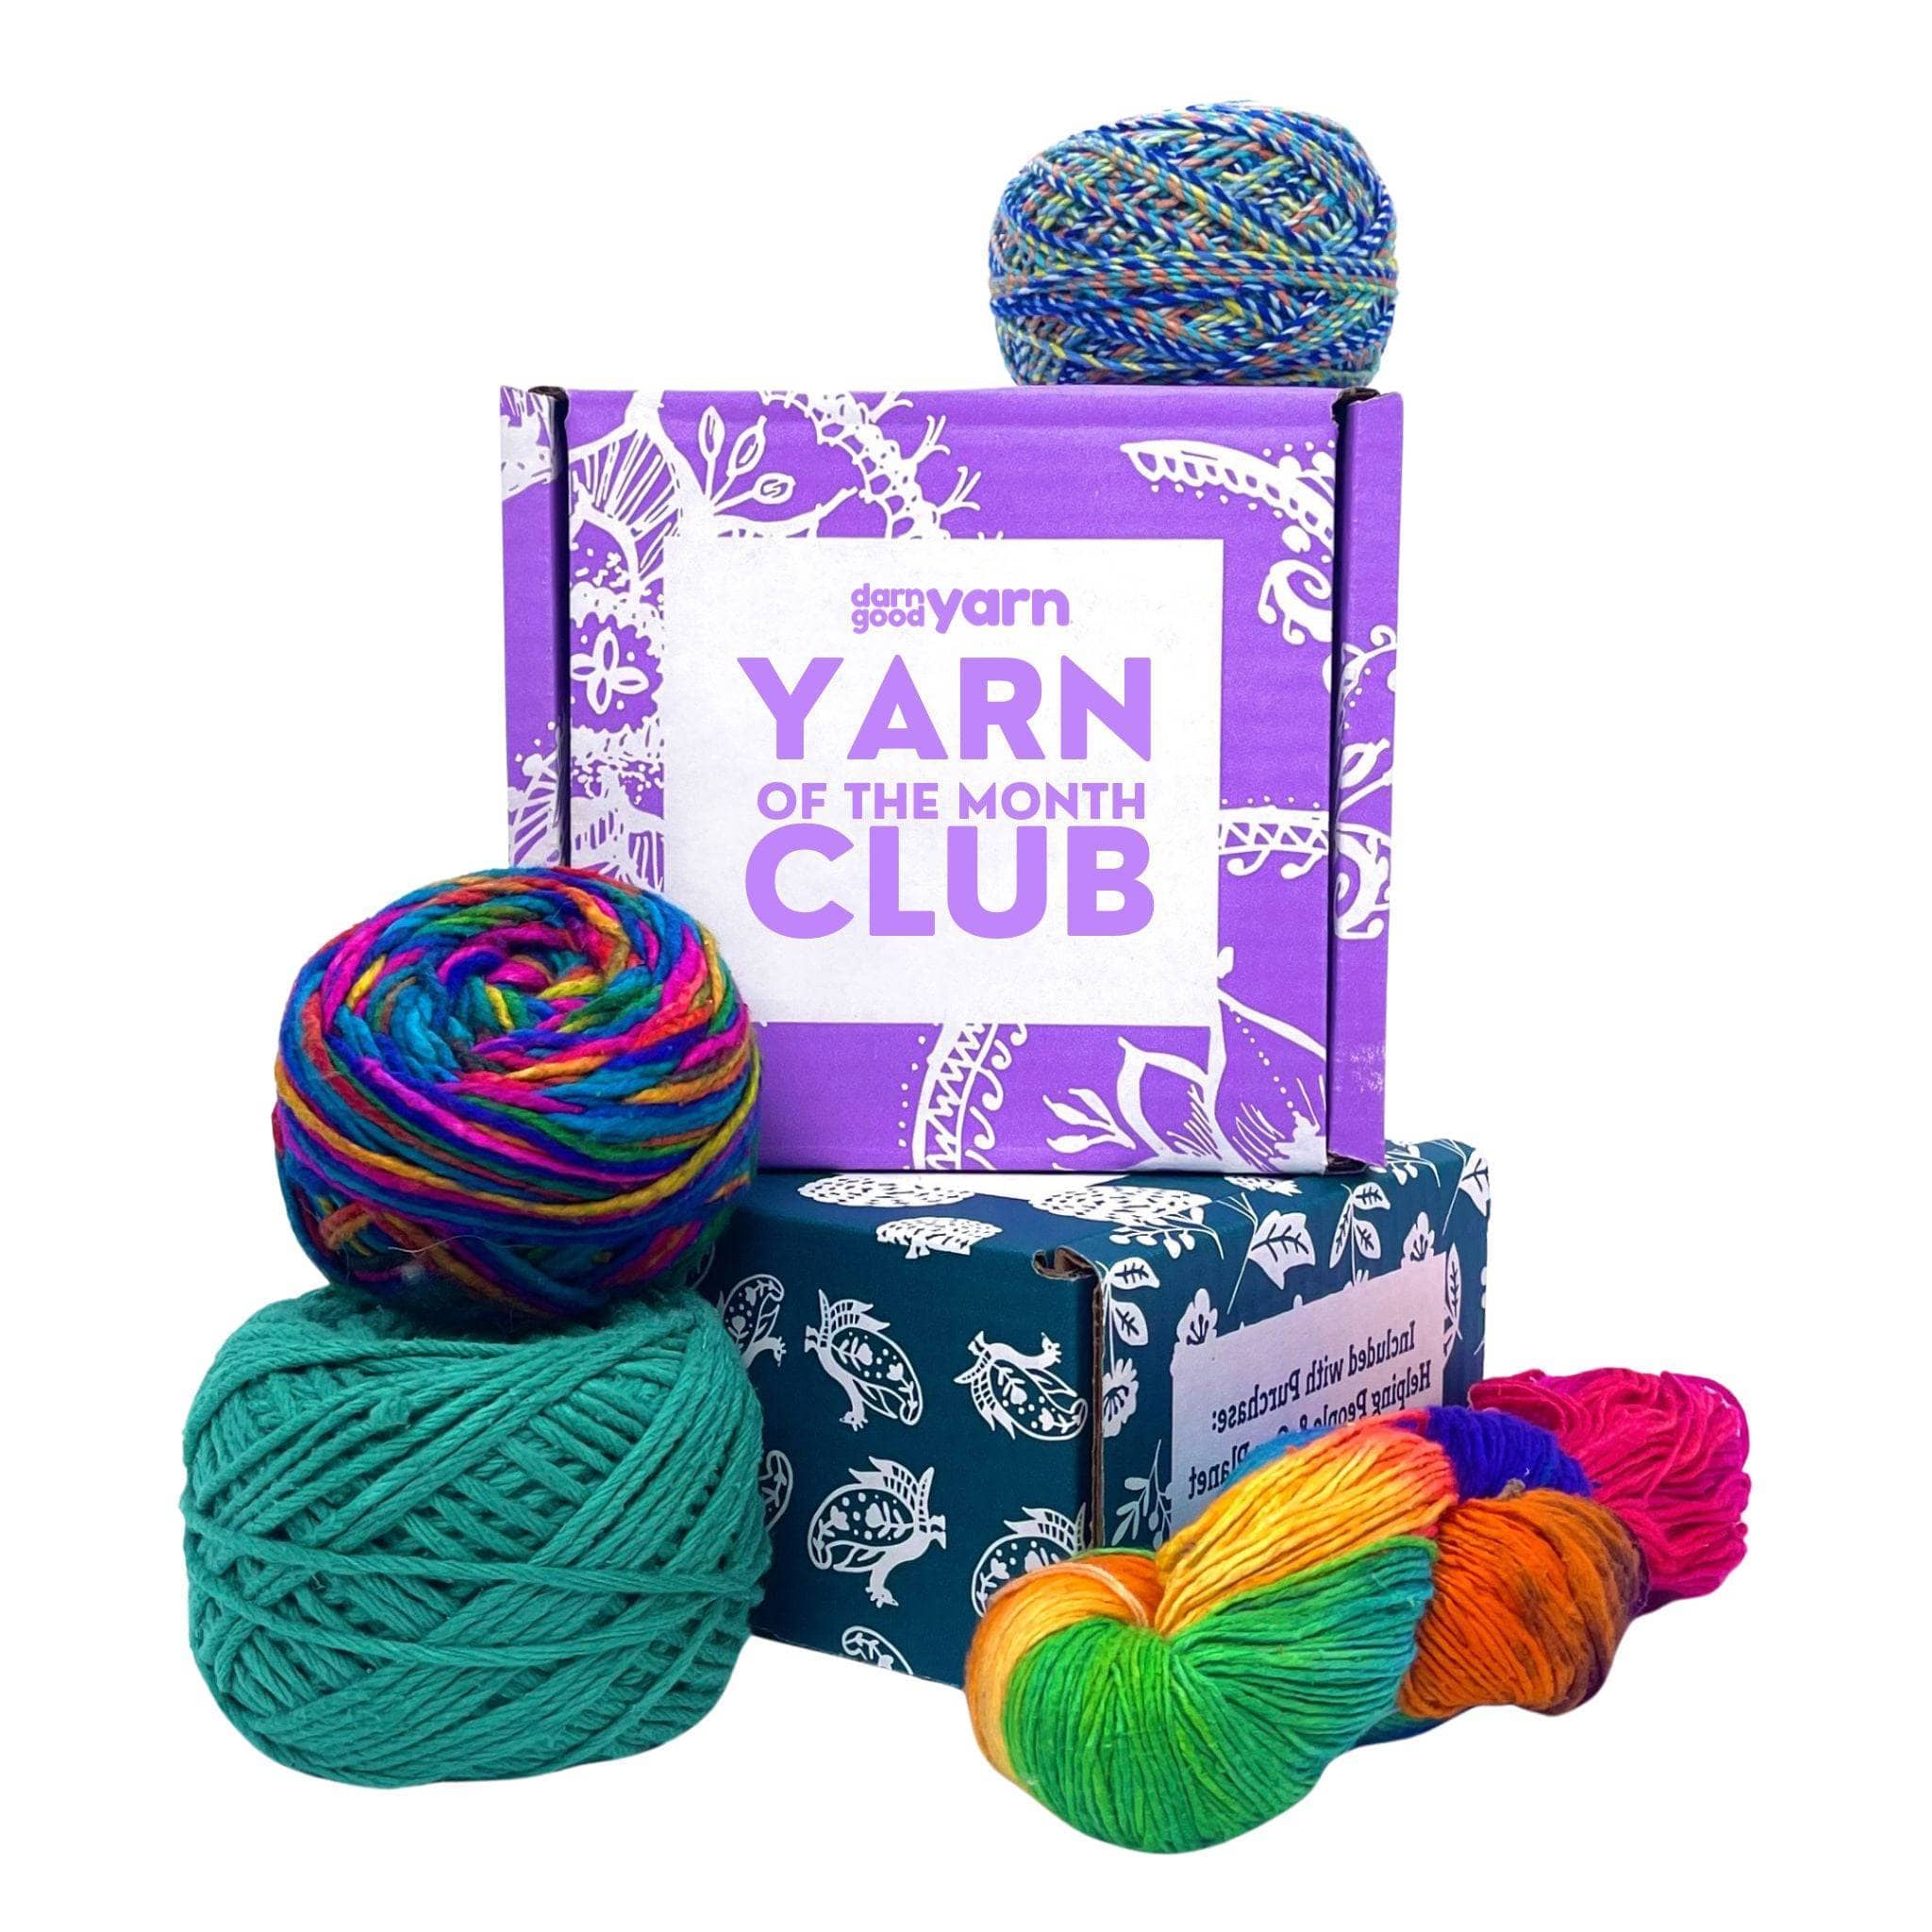 5 Easy Yarn Scrap Projects - Fun Ways to Recycle Yarn – Darn Good Yarn